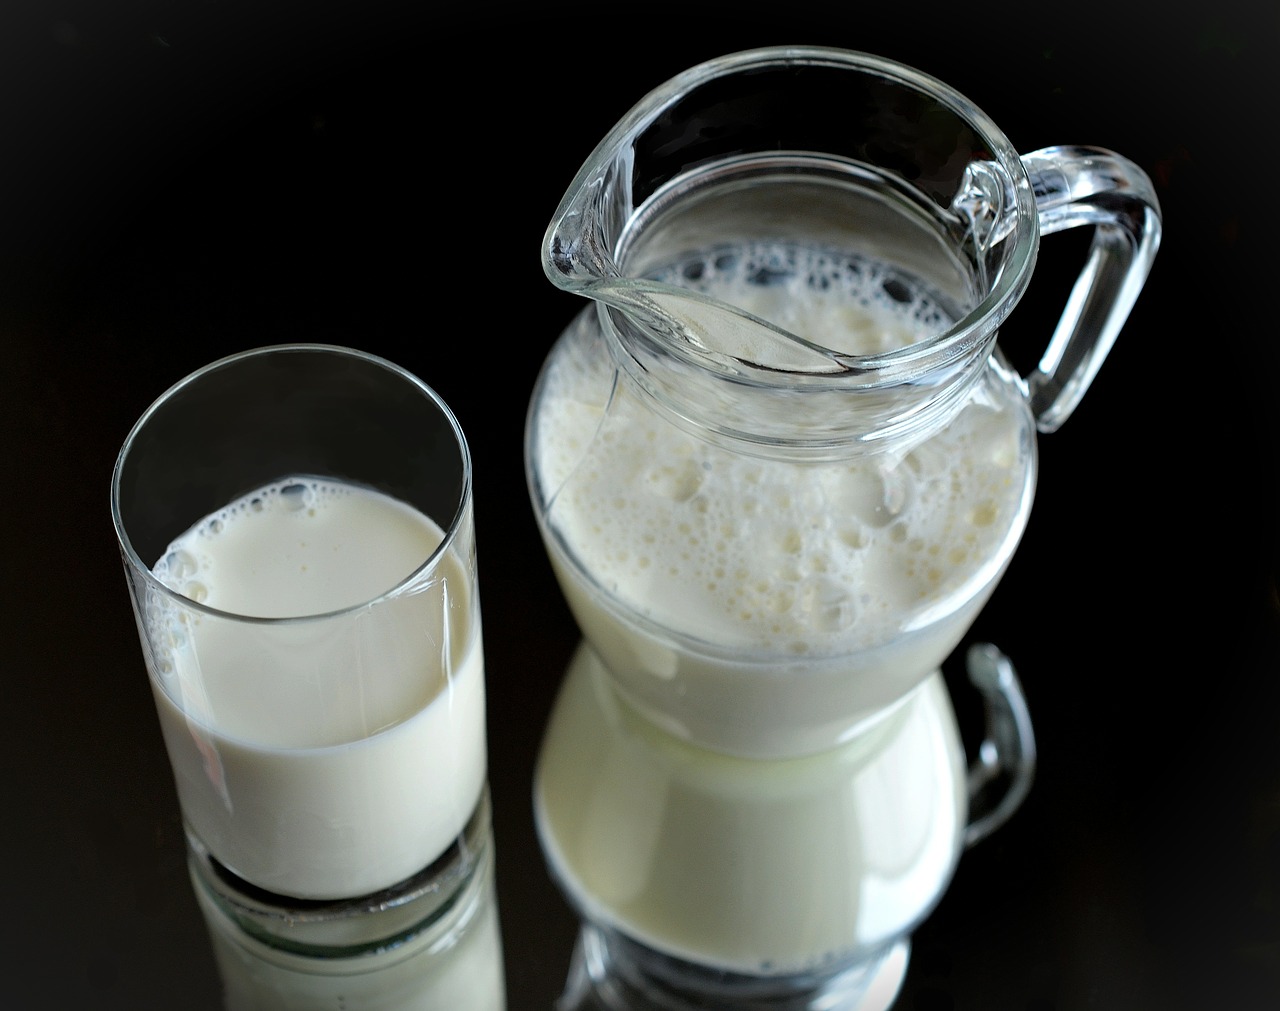 Ways to test purity of Milk